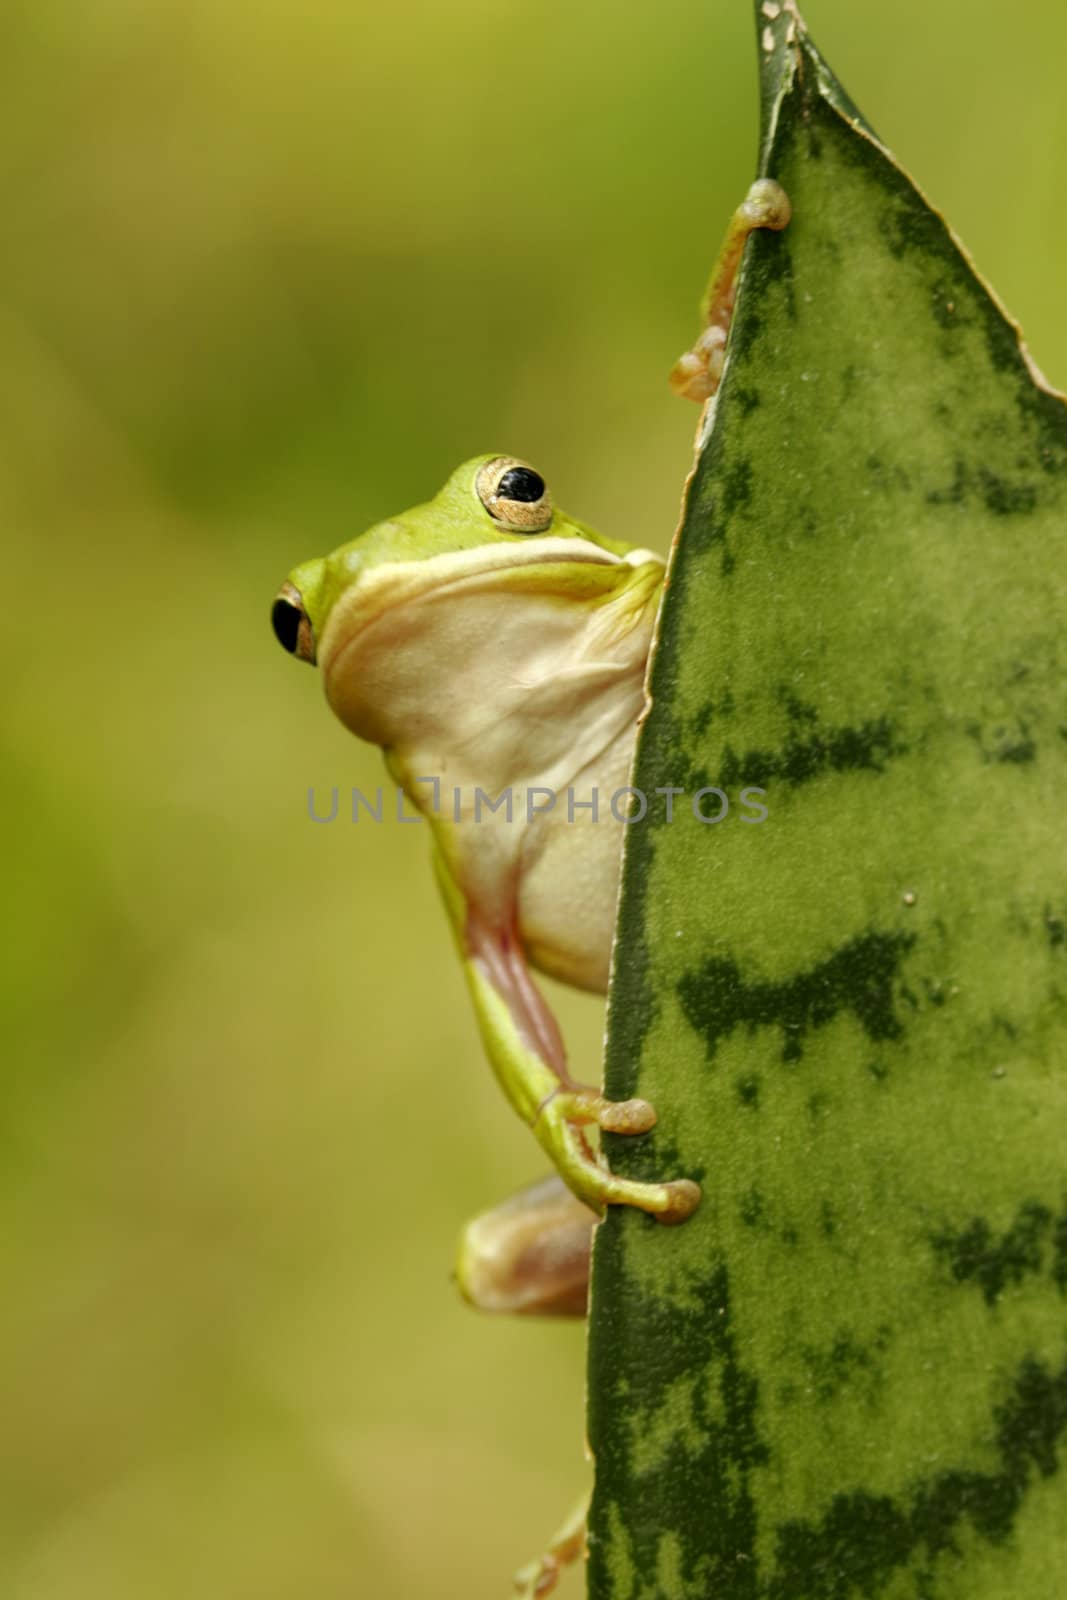 Green tree frog (Hyla cinerea) on a leaf